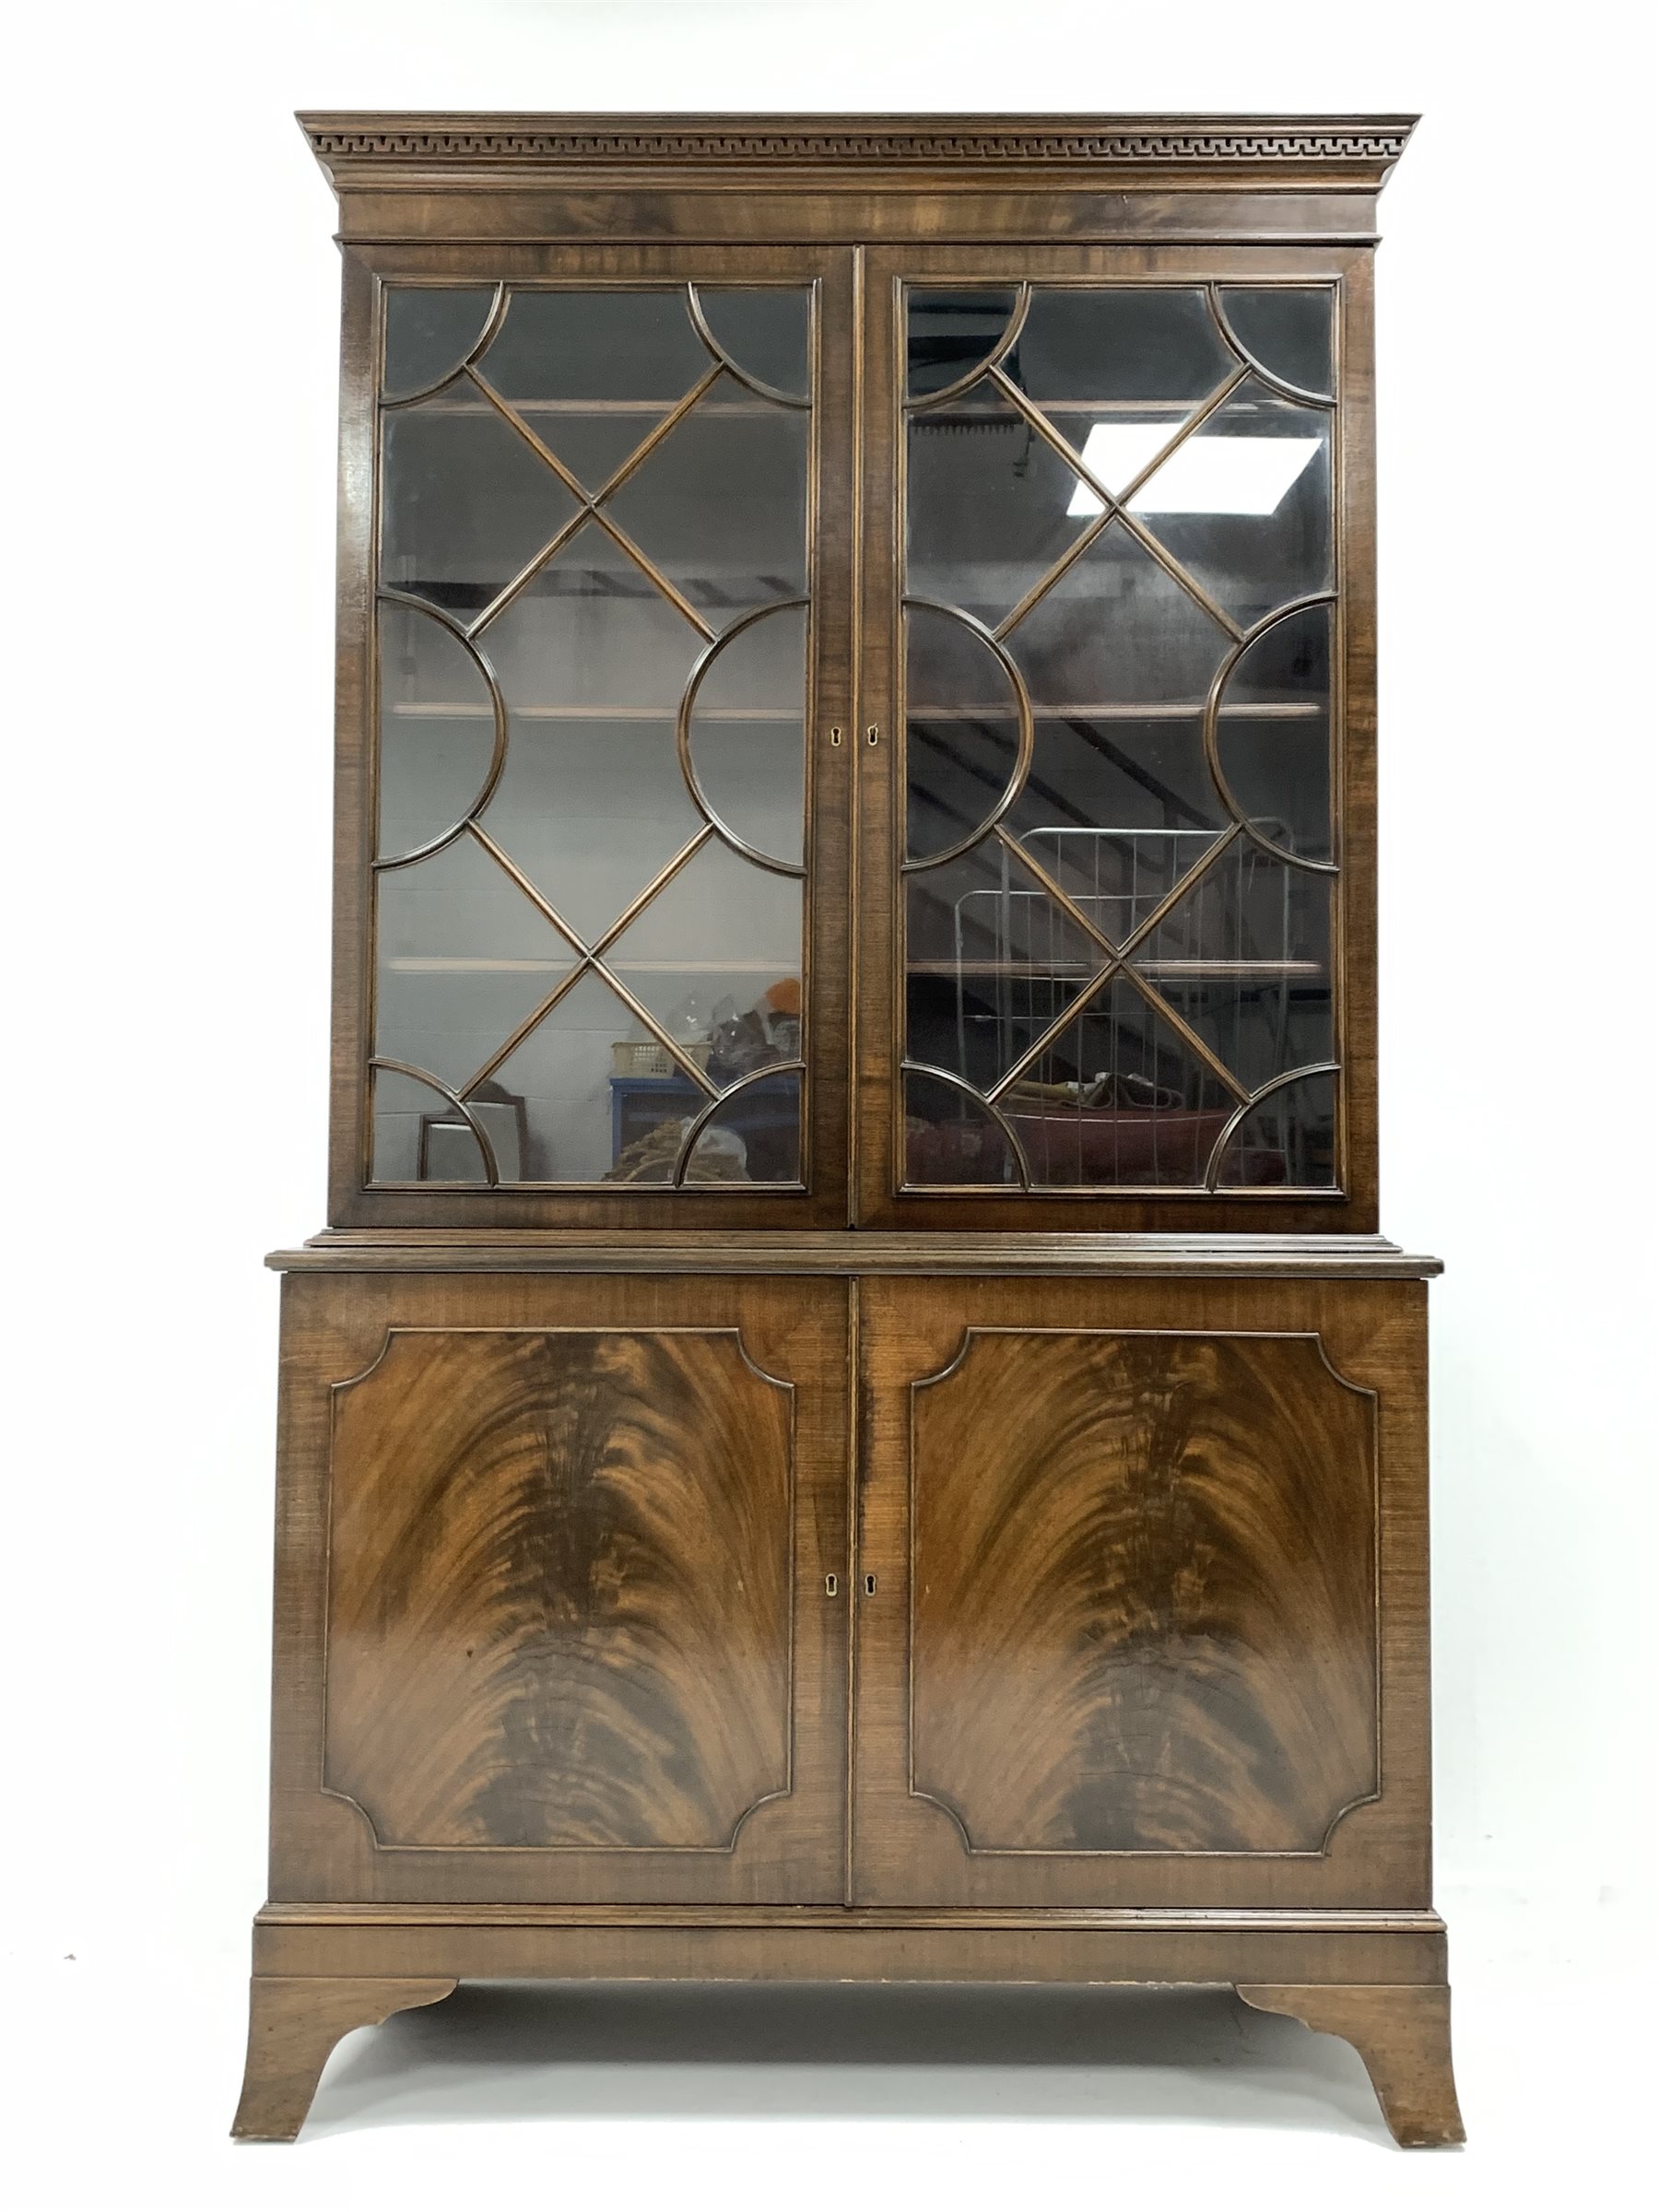 20th century Georgian design mahogany bookcase on cupboard, dentil cornice over double astragal glaz - Image 2 of 5